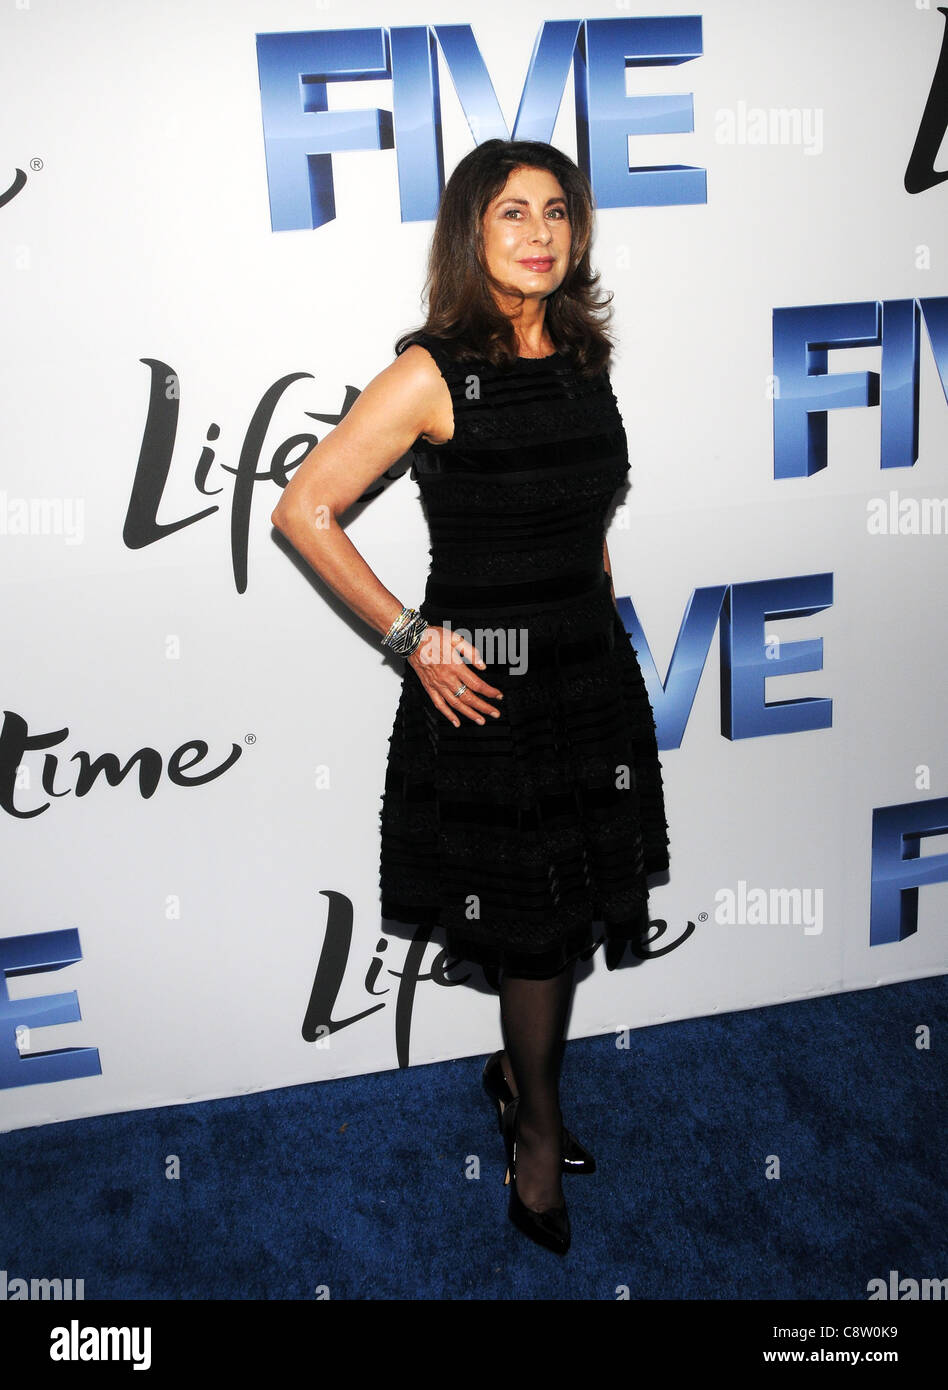 Paula Wagner, Executive Producer  at arrivals for Premiere of Lifetime Movie FIVE, Skylight Soho, New York, NY September 26, Stock Photo